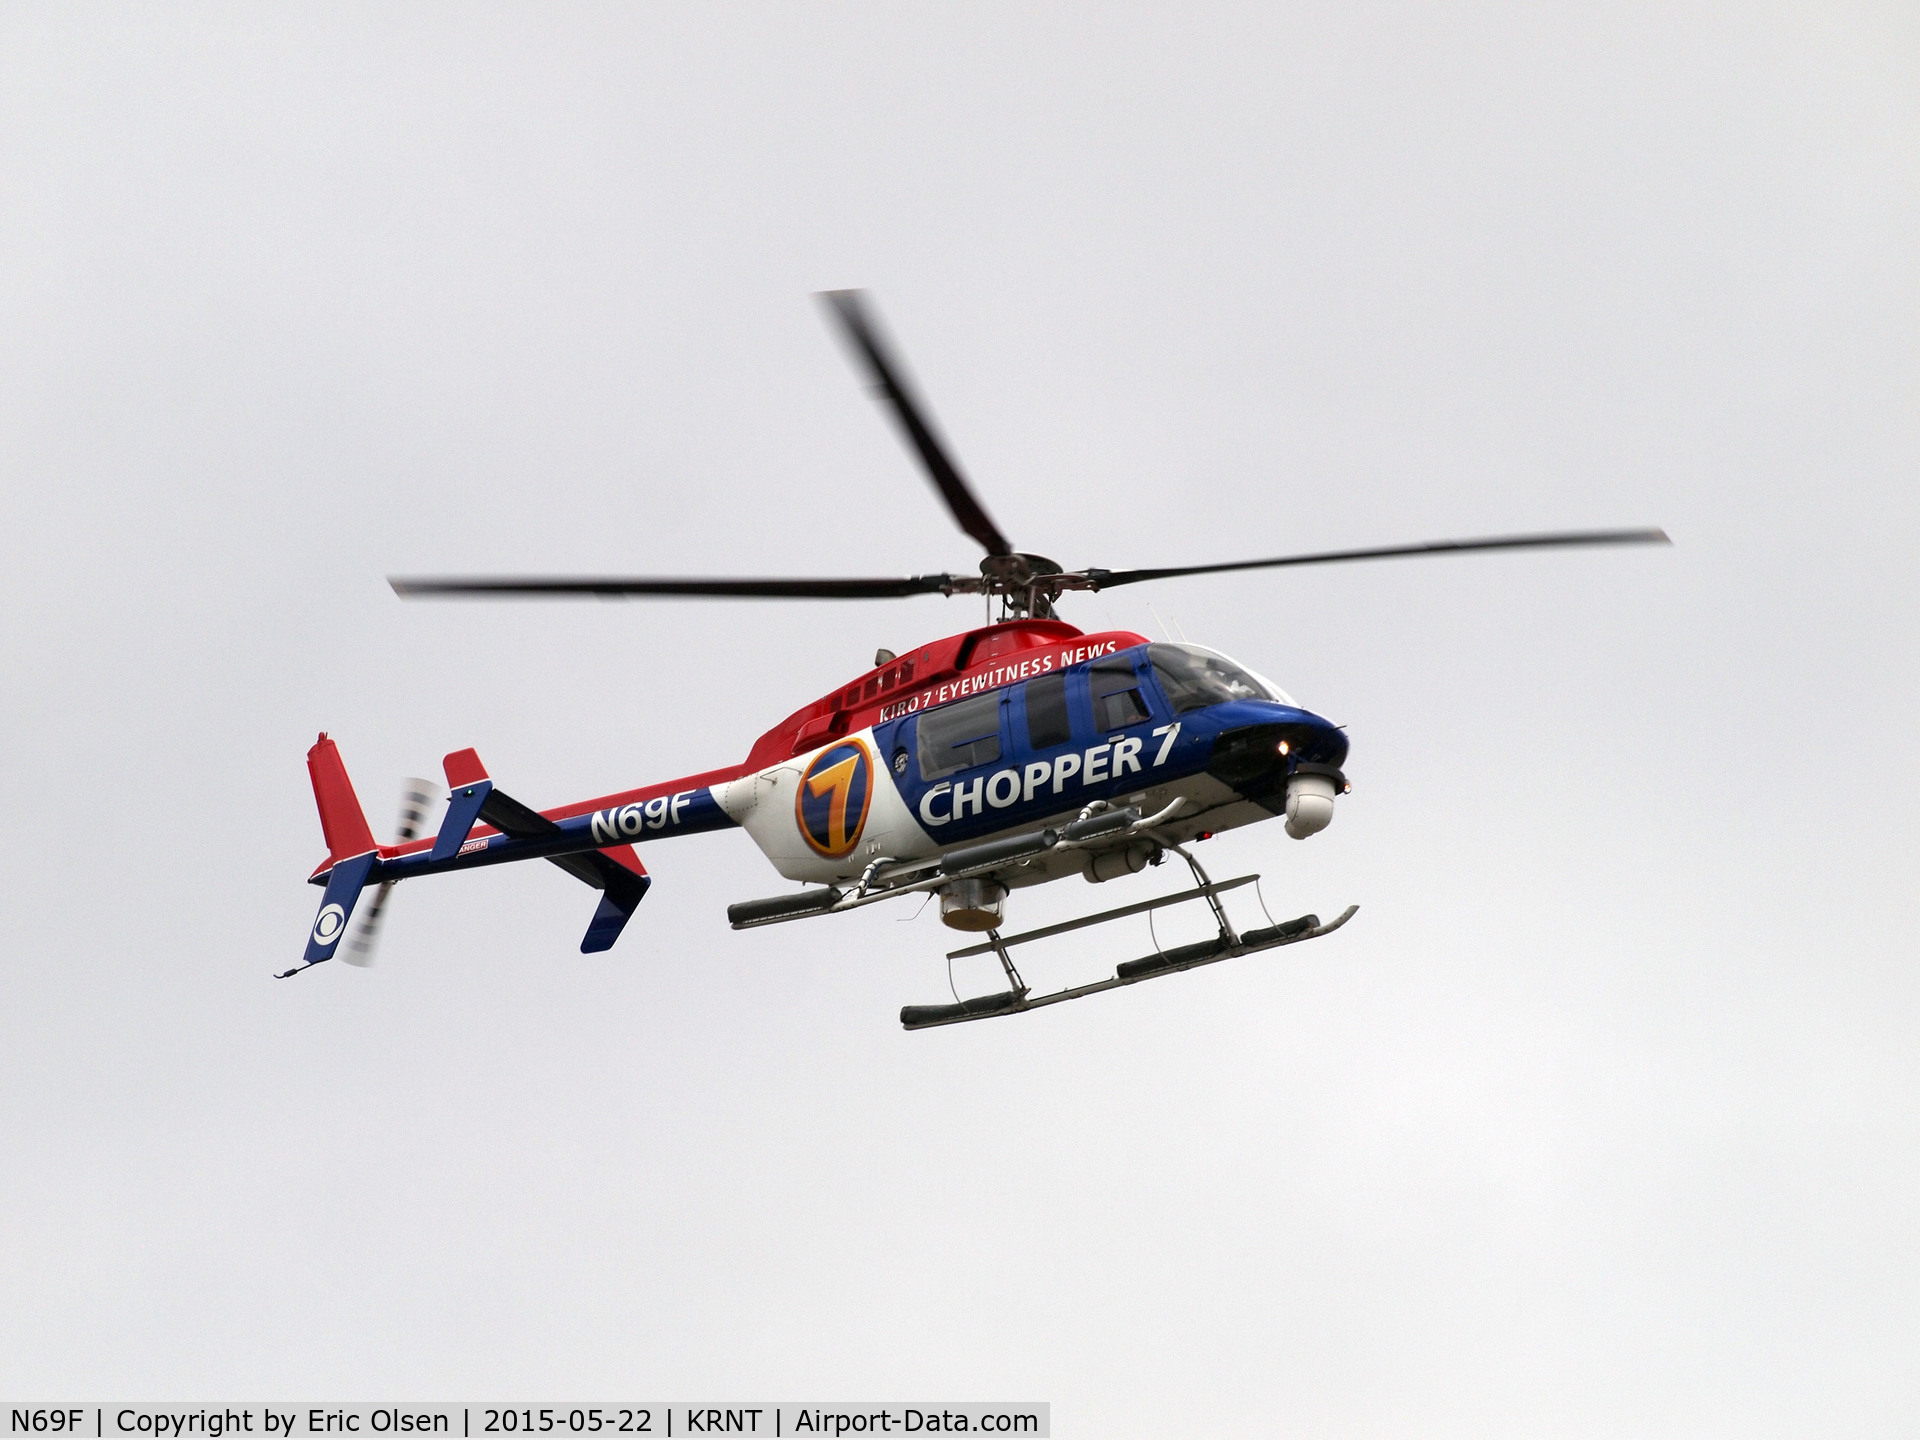 N69F, 1996 Bell 407 C/N 53025, Kiro Eyewitness News chopper 7 over the Renton airport.